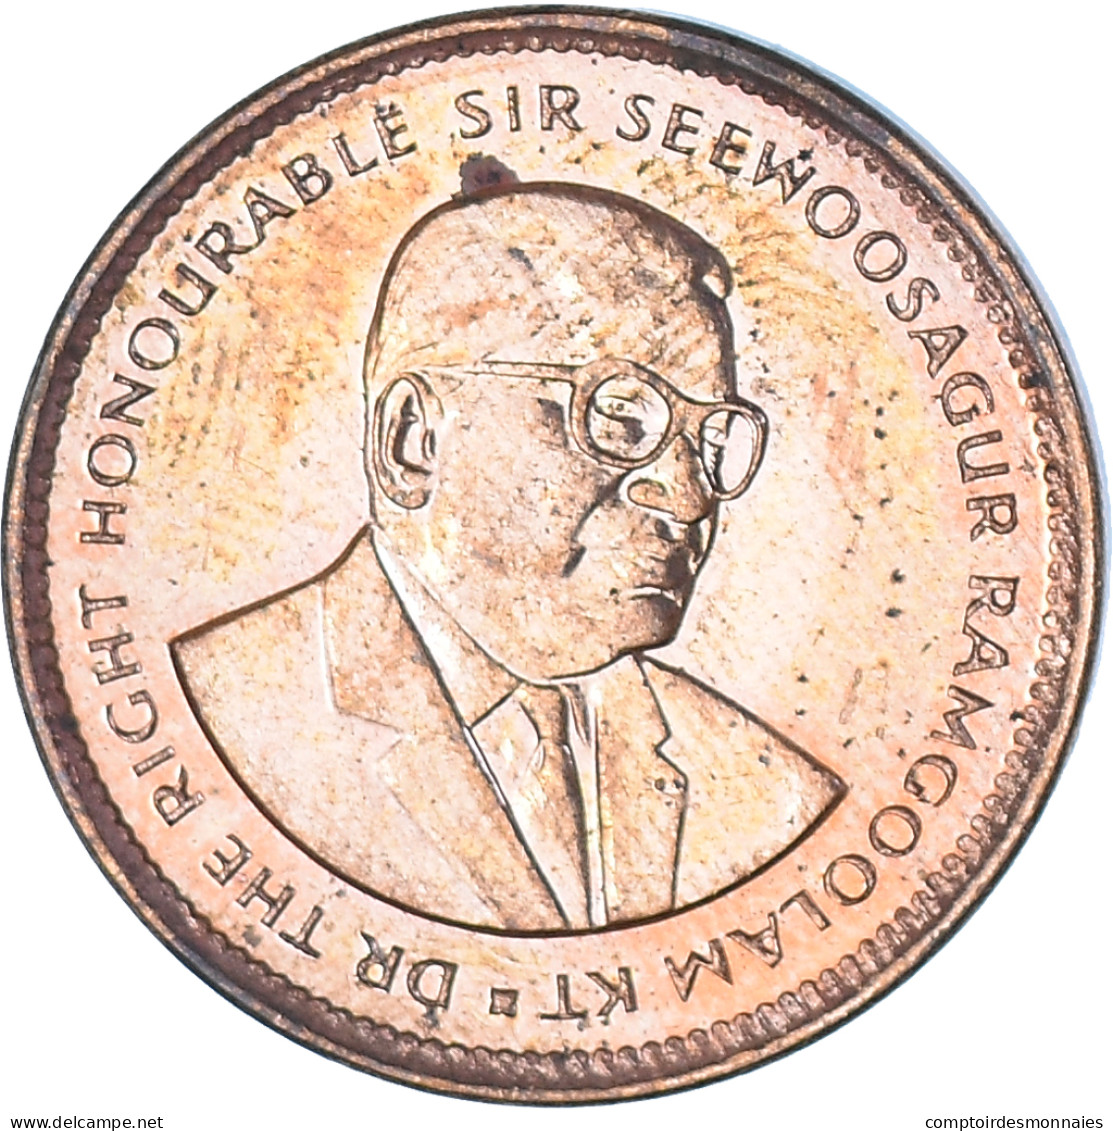 Monnaie, Maurice, 5 Cents, 1993 - Mauritius